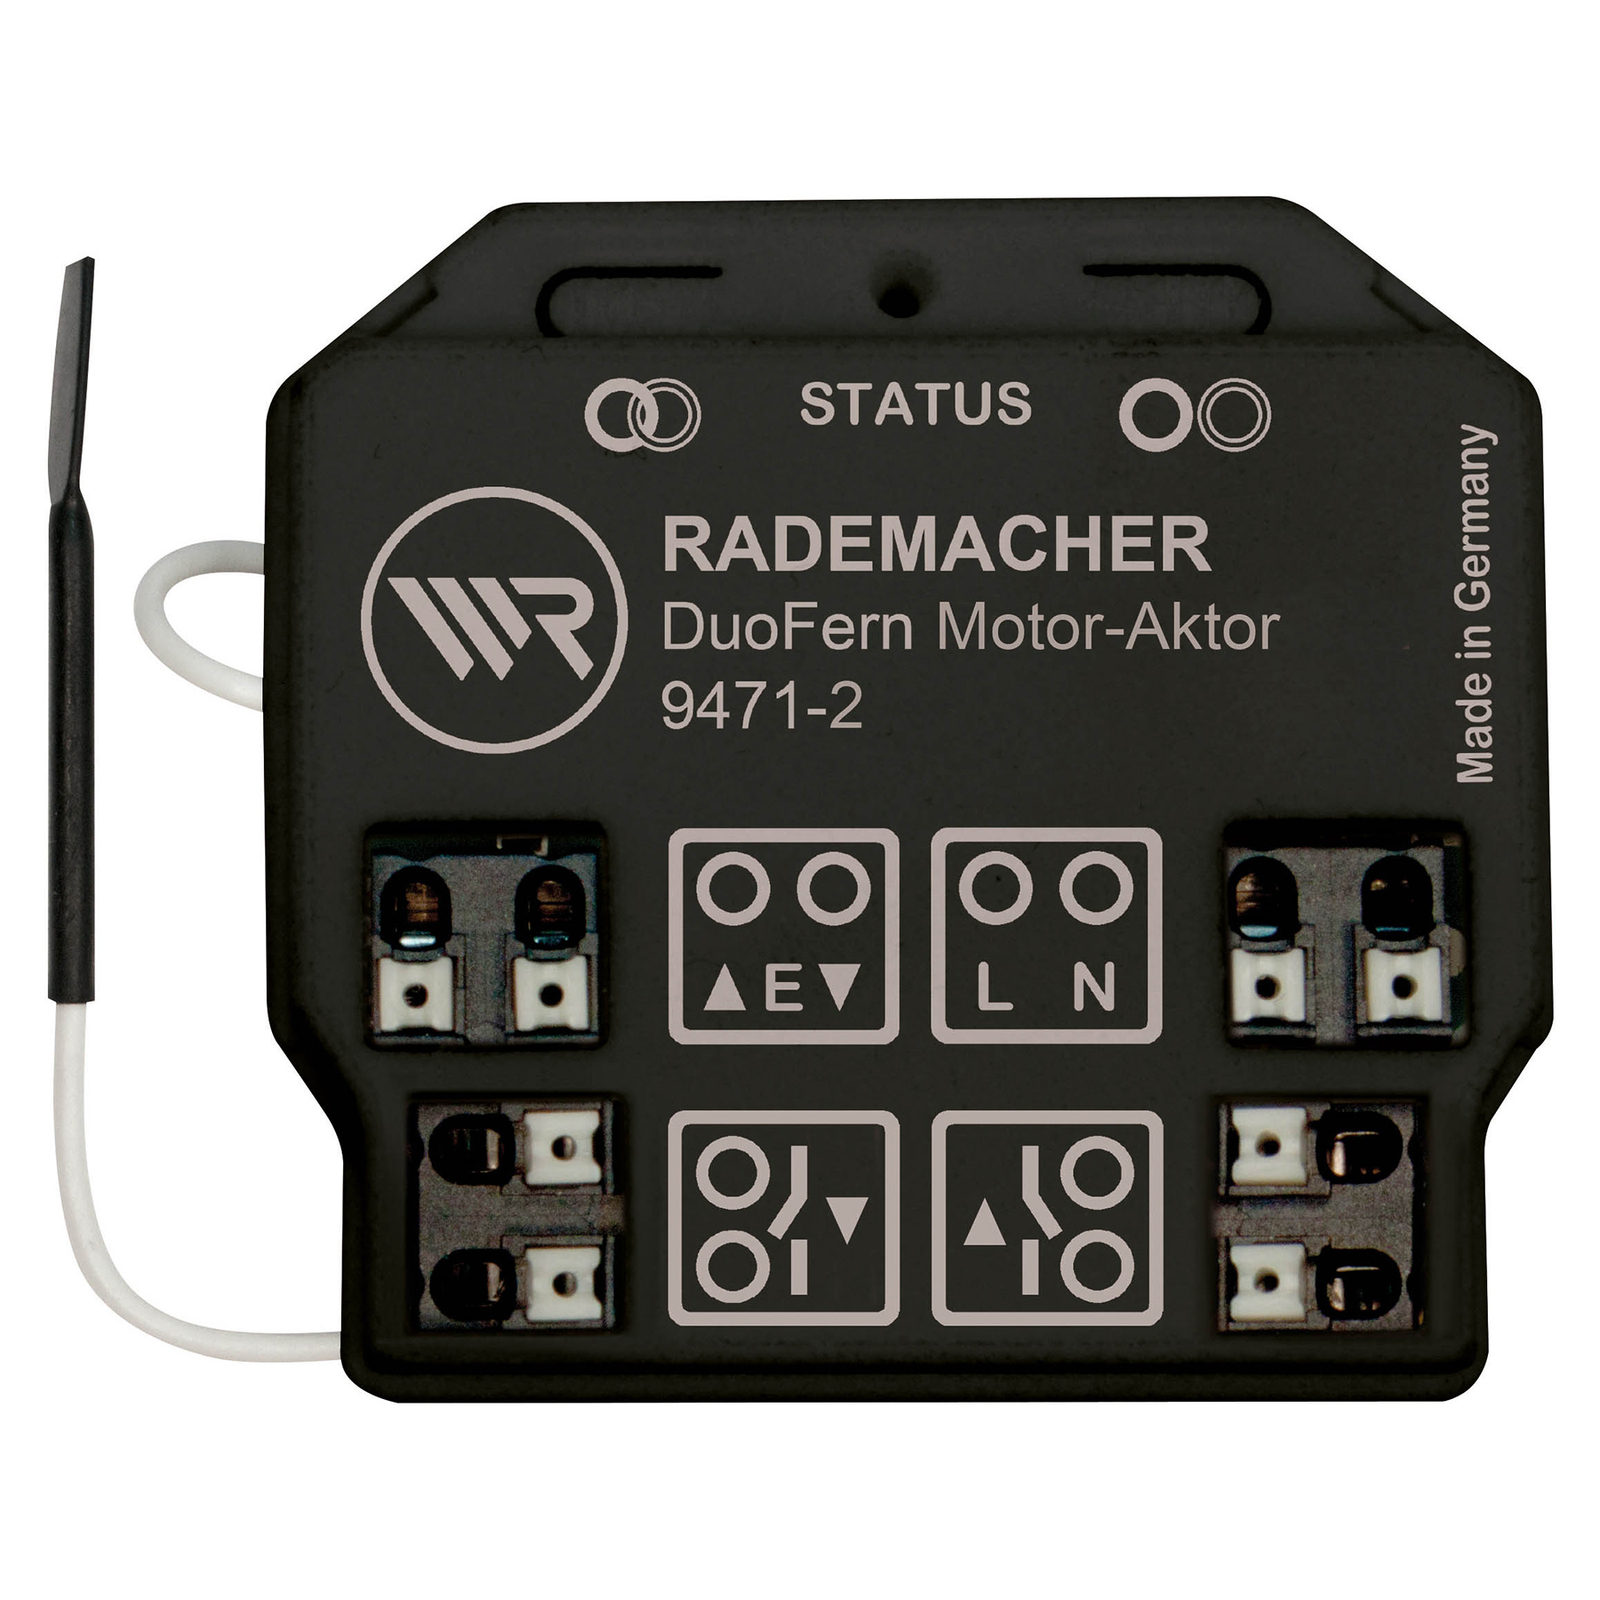 Rademacher DuoFern Rohrmotor-Aktor, potentialfrei